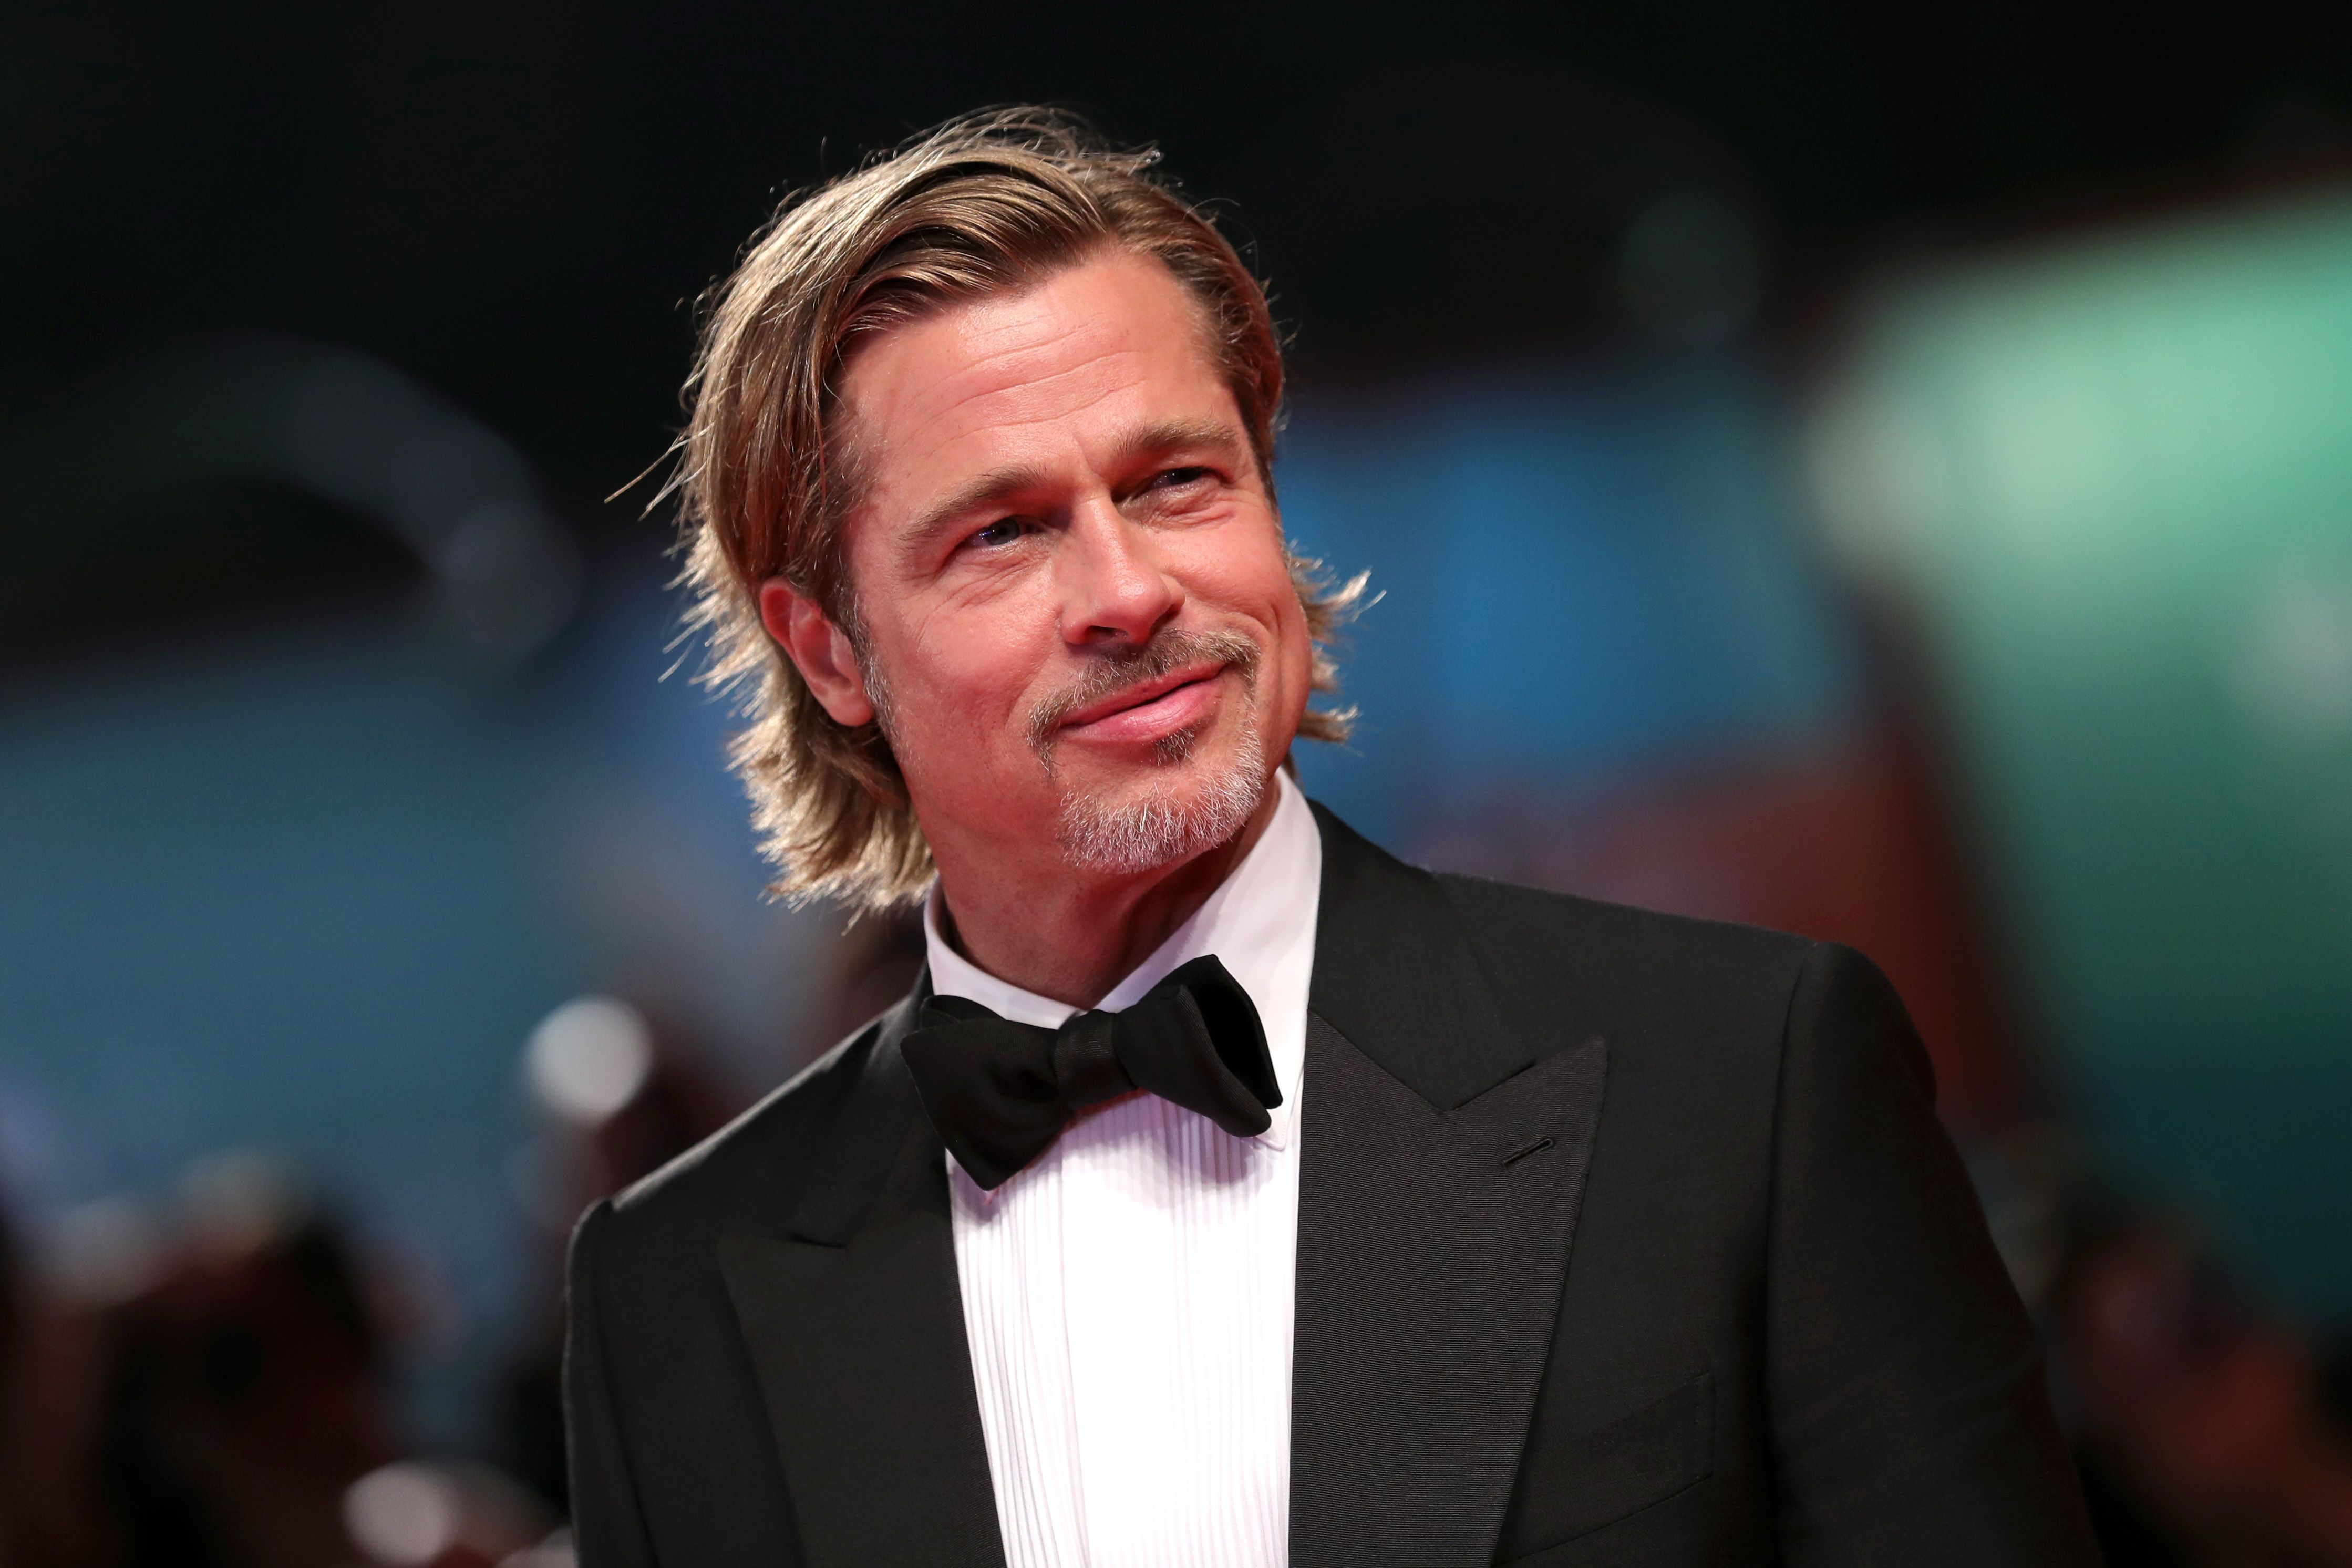 Brad Pitt's Oscars tuxedo: Meet the man who designed it